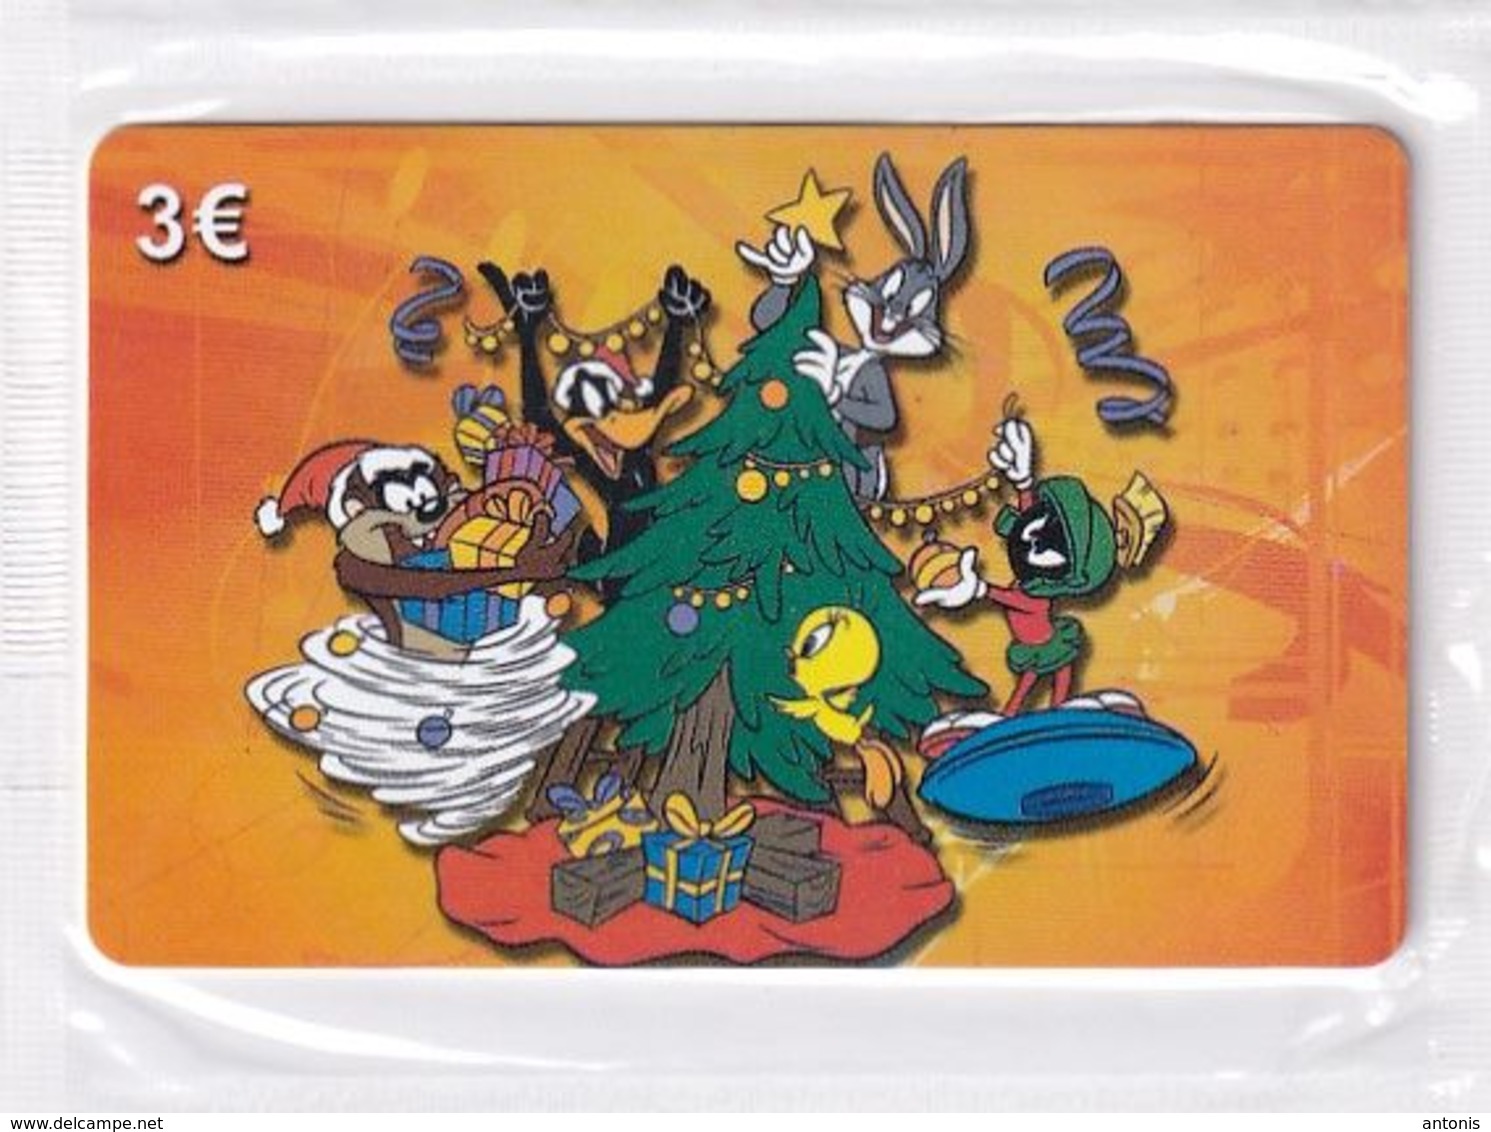 GREECE - Looney Tunes, Amimex Prepaid Card 3 Euro, Tirage 2000, Mint - Grèce